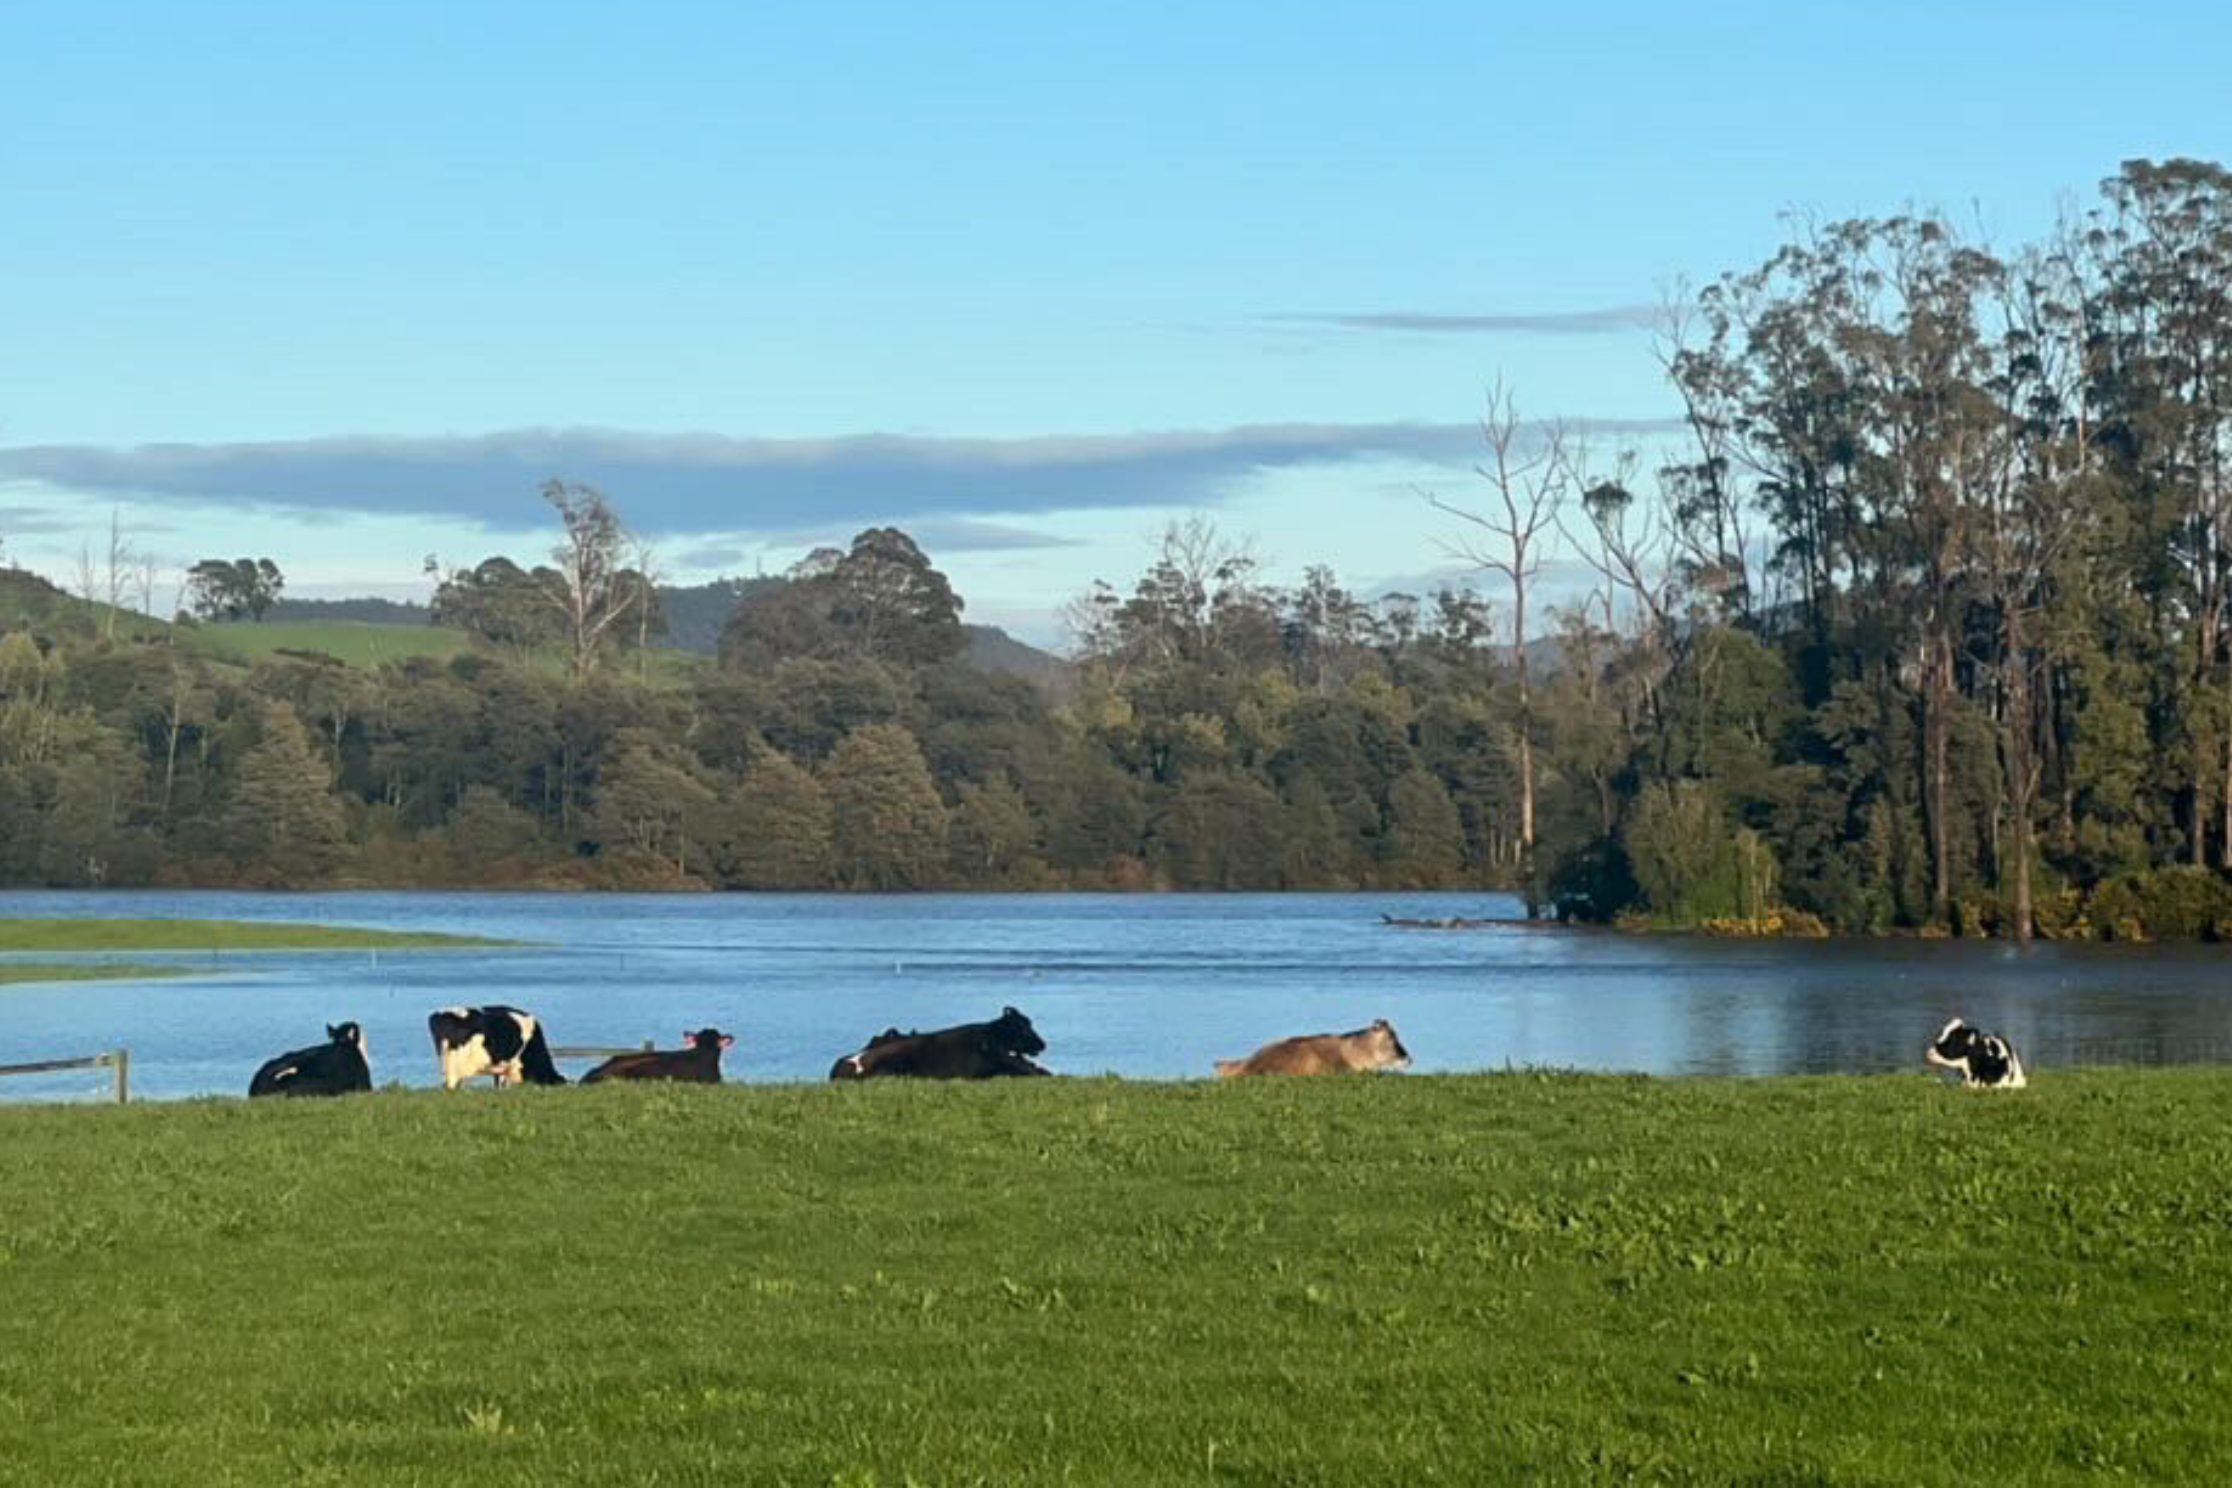 Cows near flood waters